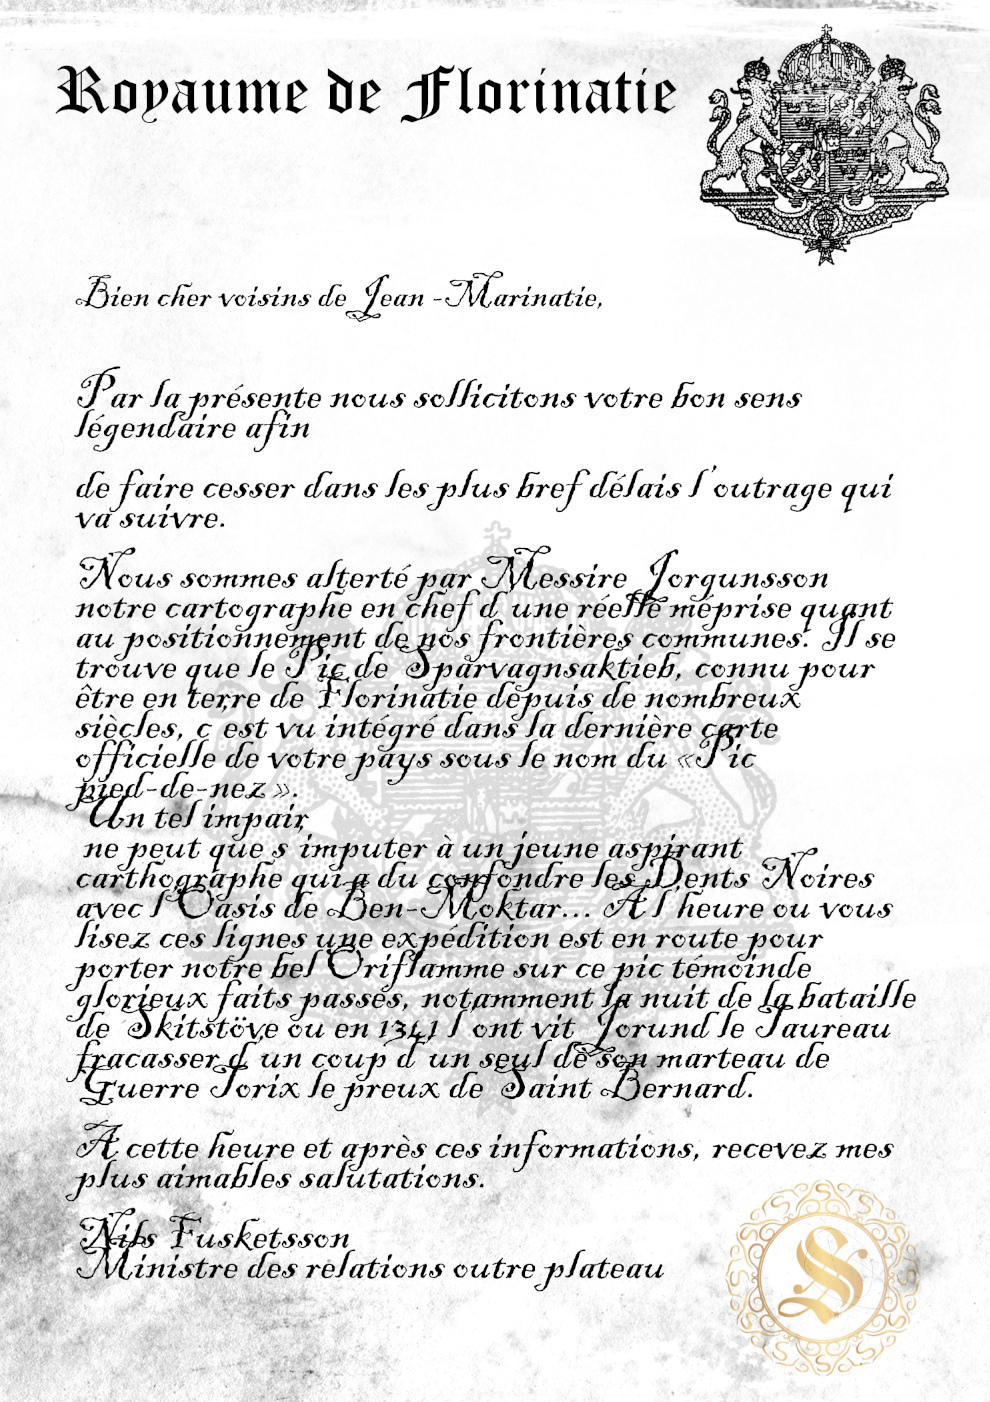 Diplomatie Crise Florinatie -JeanMarinatie 1802 Missiv10